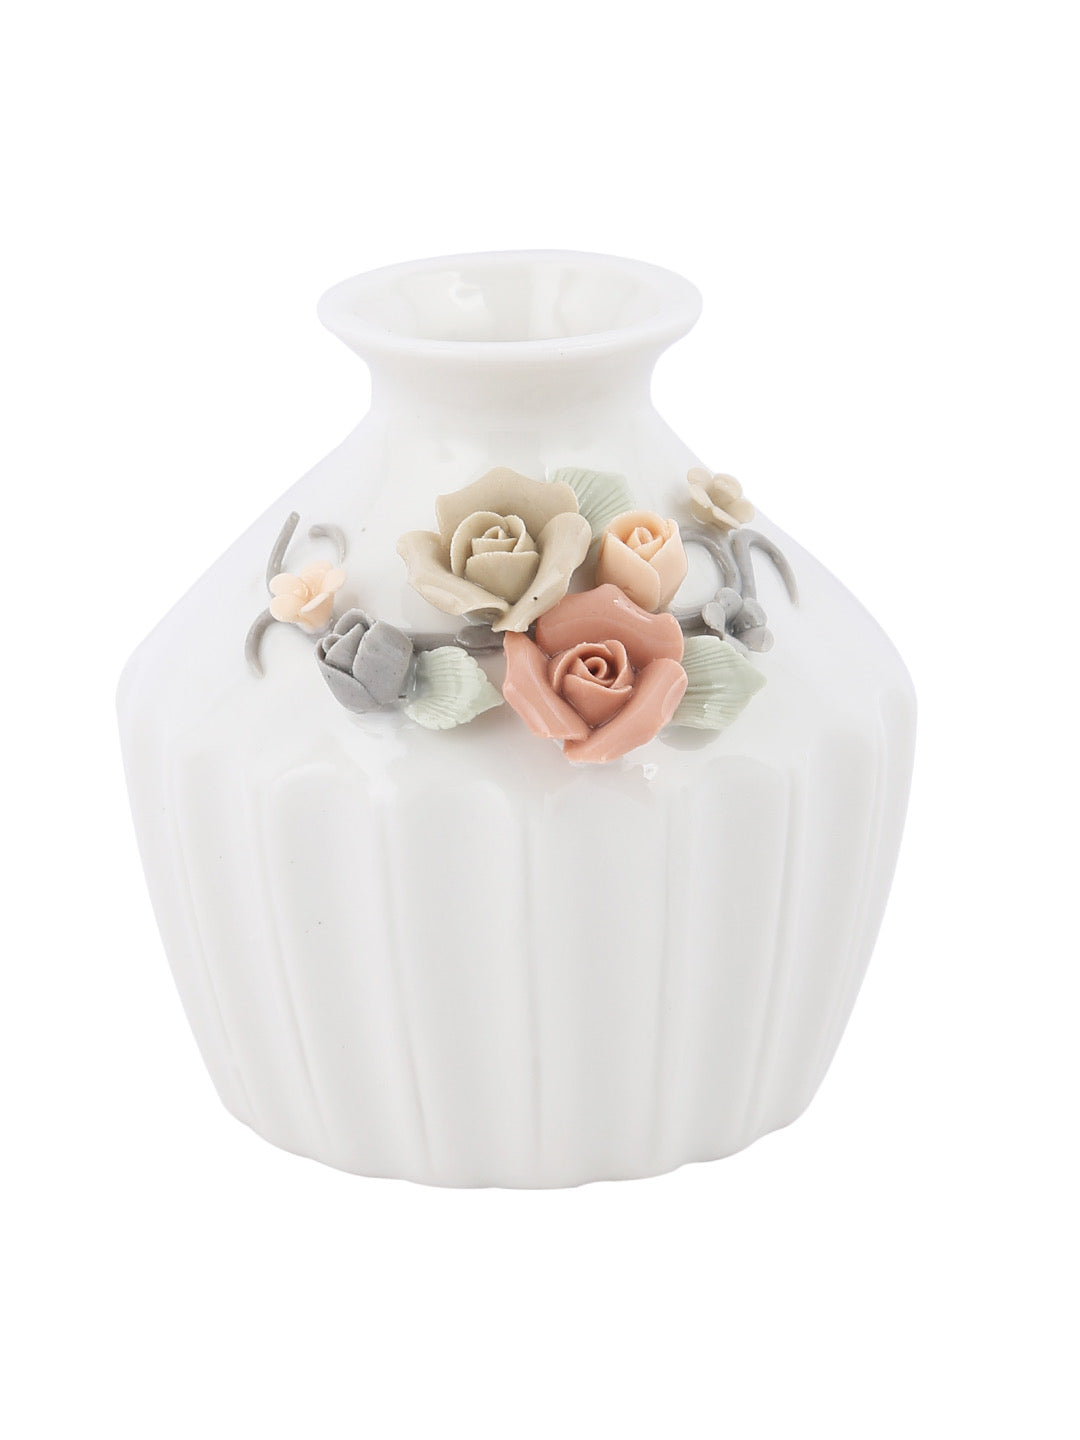 White Beautiful and Serene Vase - Default Title (VAS18199B)